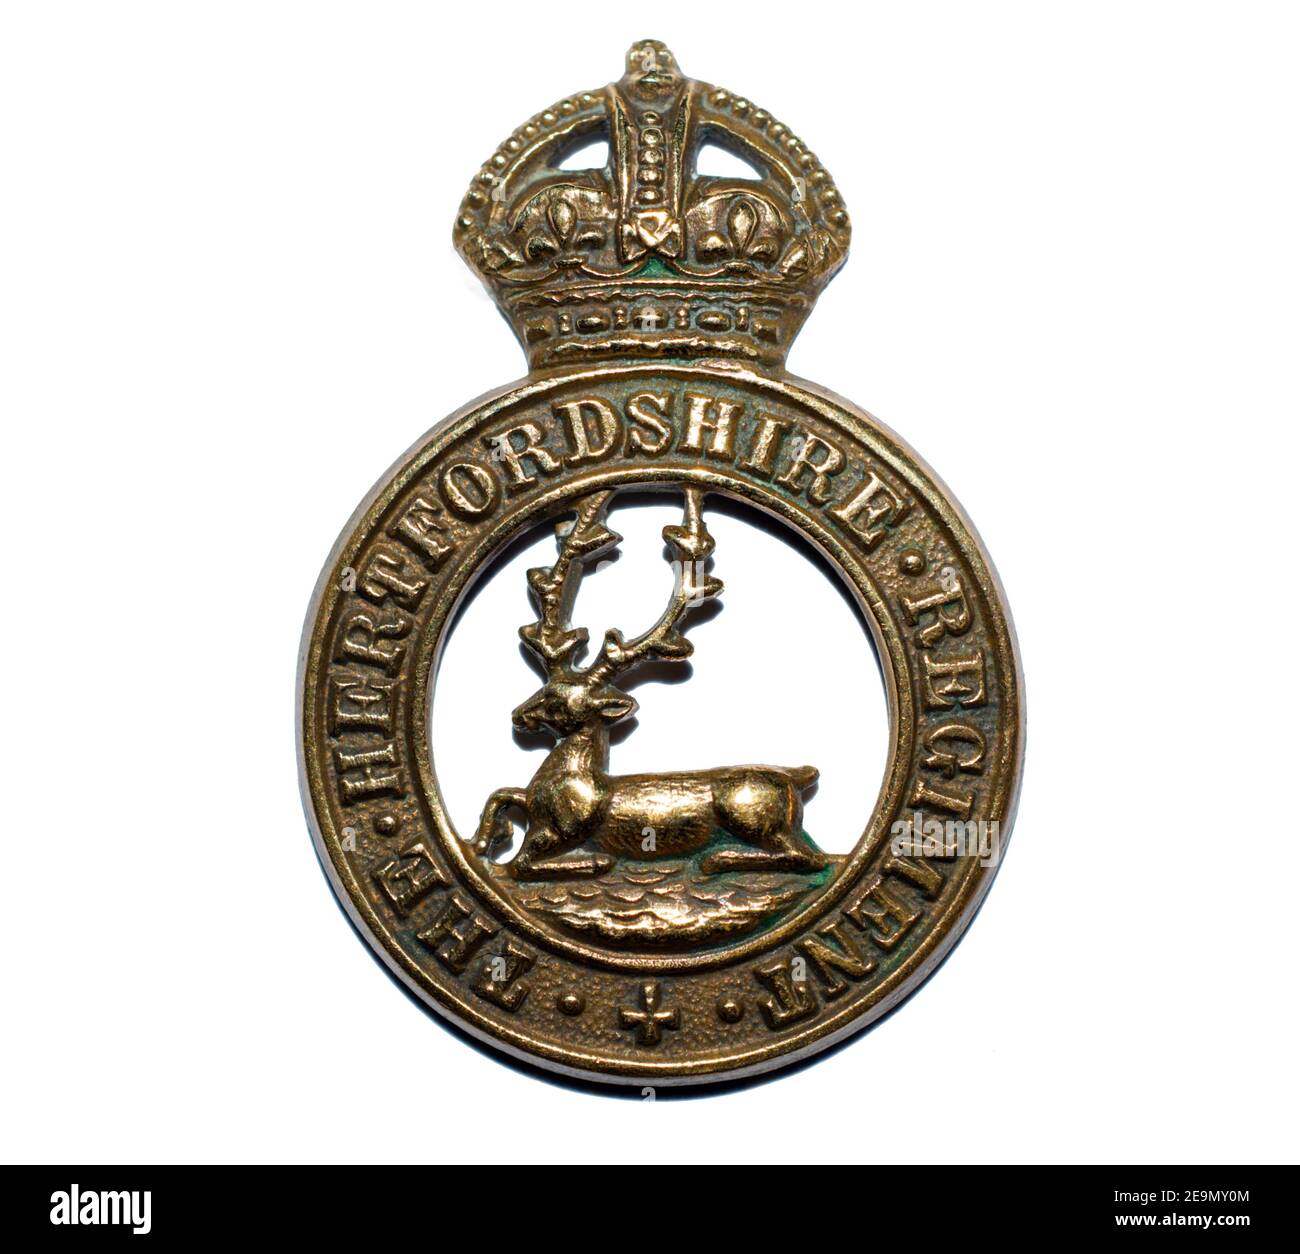 A cap badge of the Hertfordshire Regiment c. 1908-1952. Stock Photo